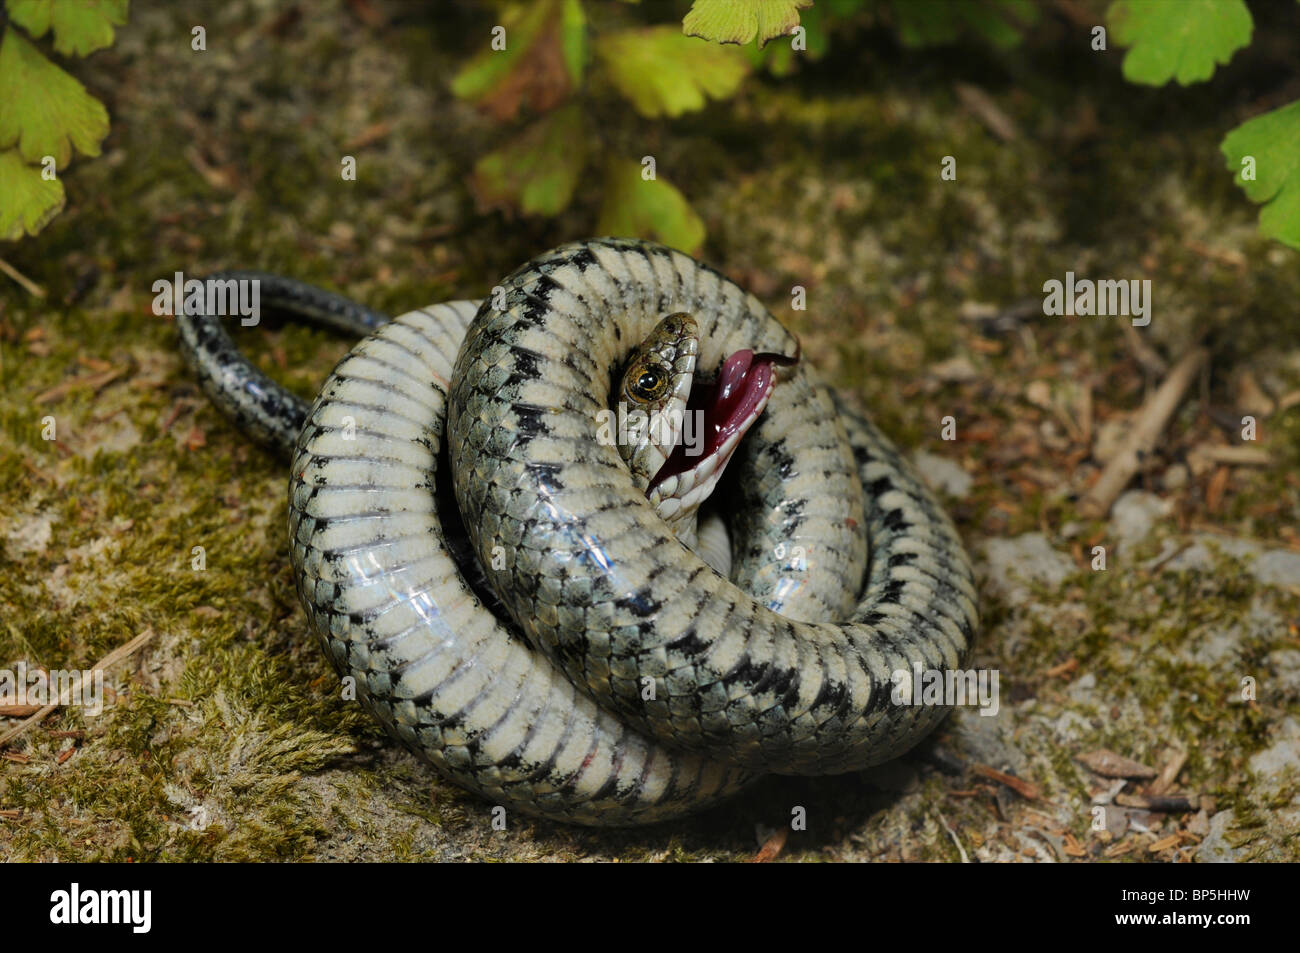 dice snake (Natrix tessellata), feigning death, Greece, Creta, Greece Stock Photo